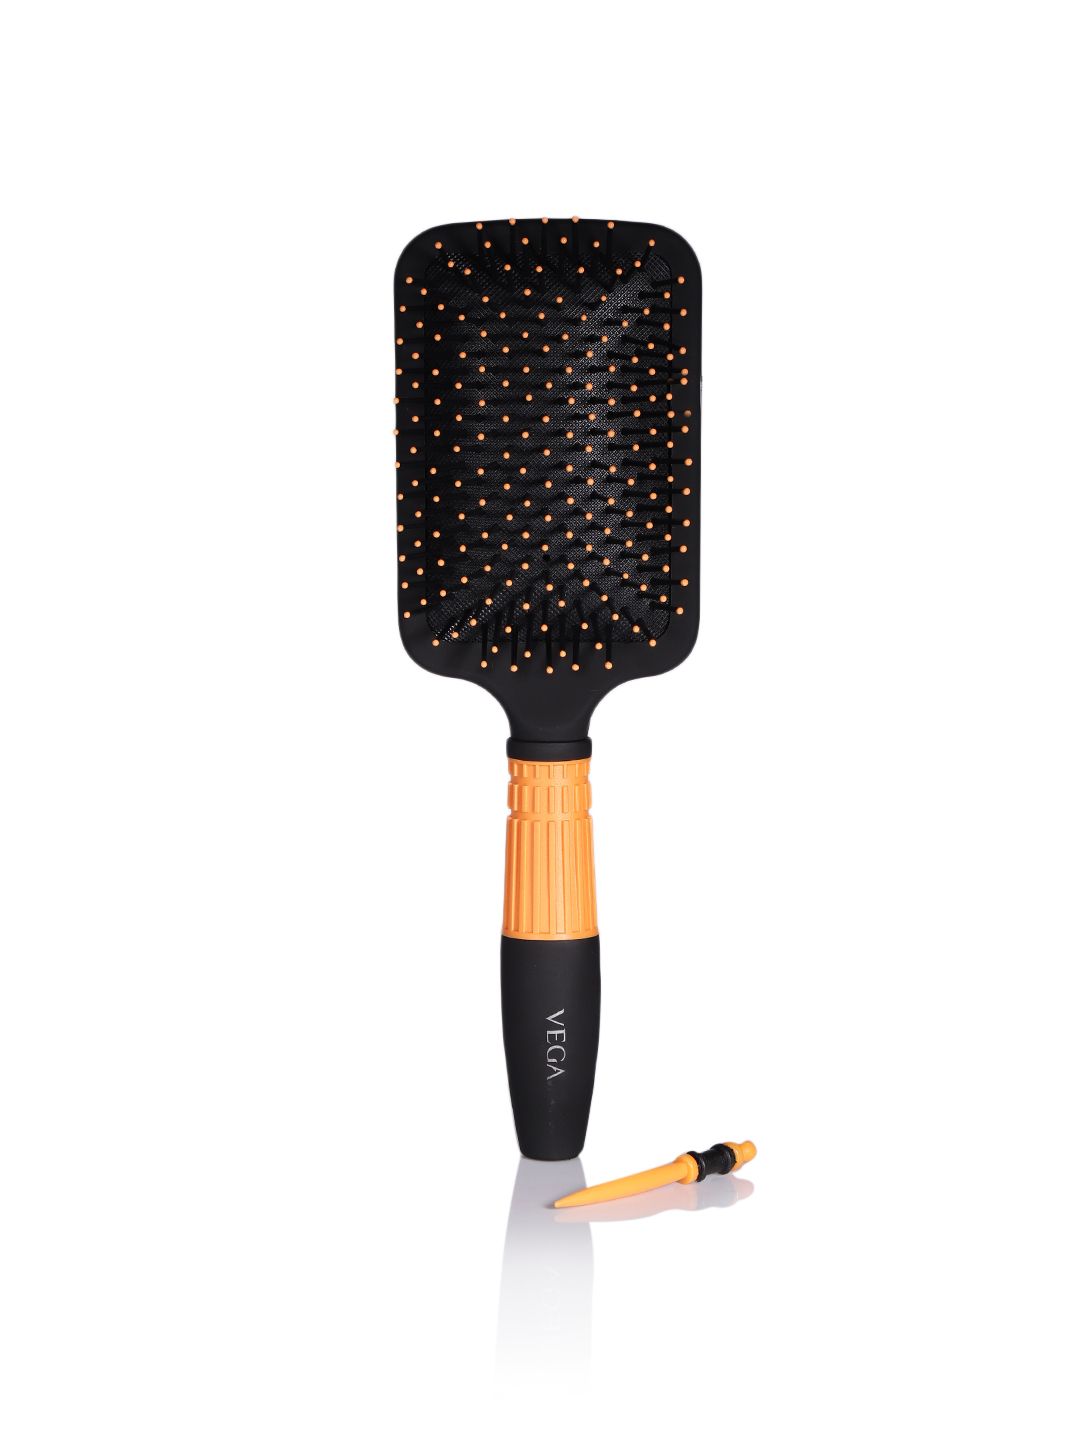 VEGA Unisex Black & Orange Paddle Hair Brush E15-PB Price in India